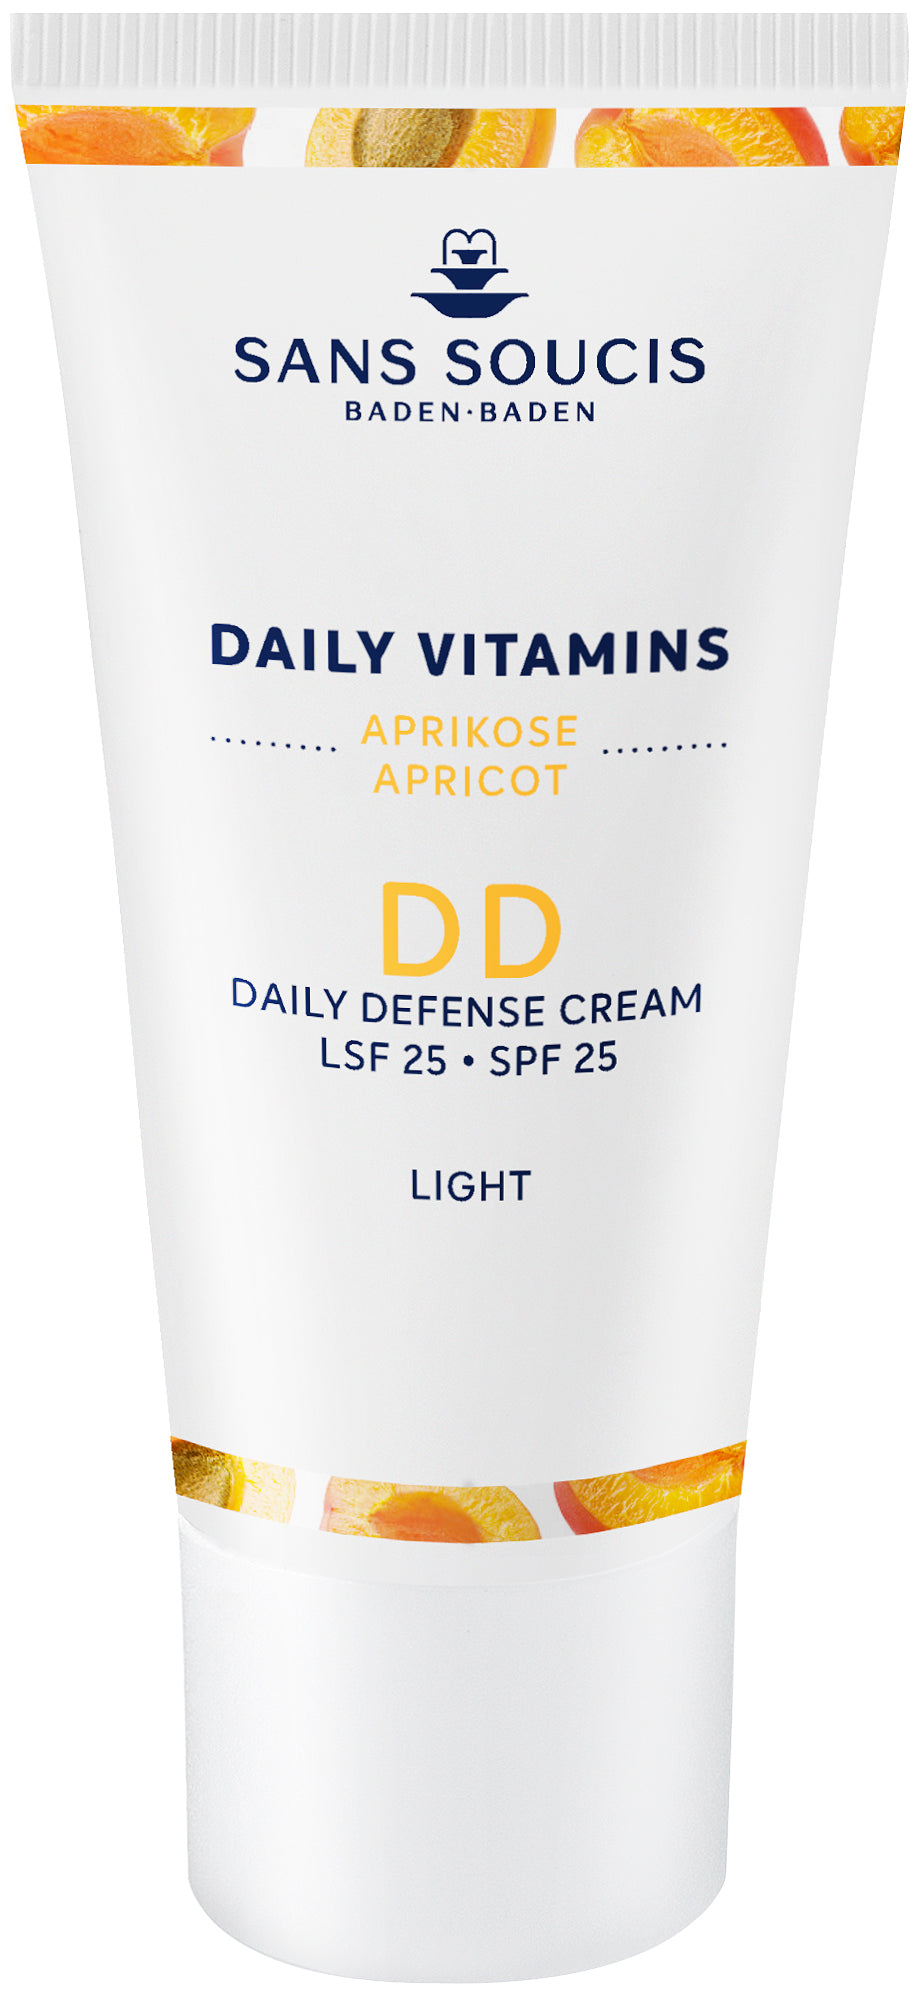 DAILY VITAMINS DD Daily Defense Cream light SPF 25